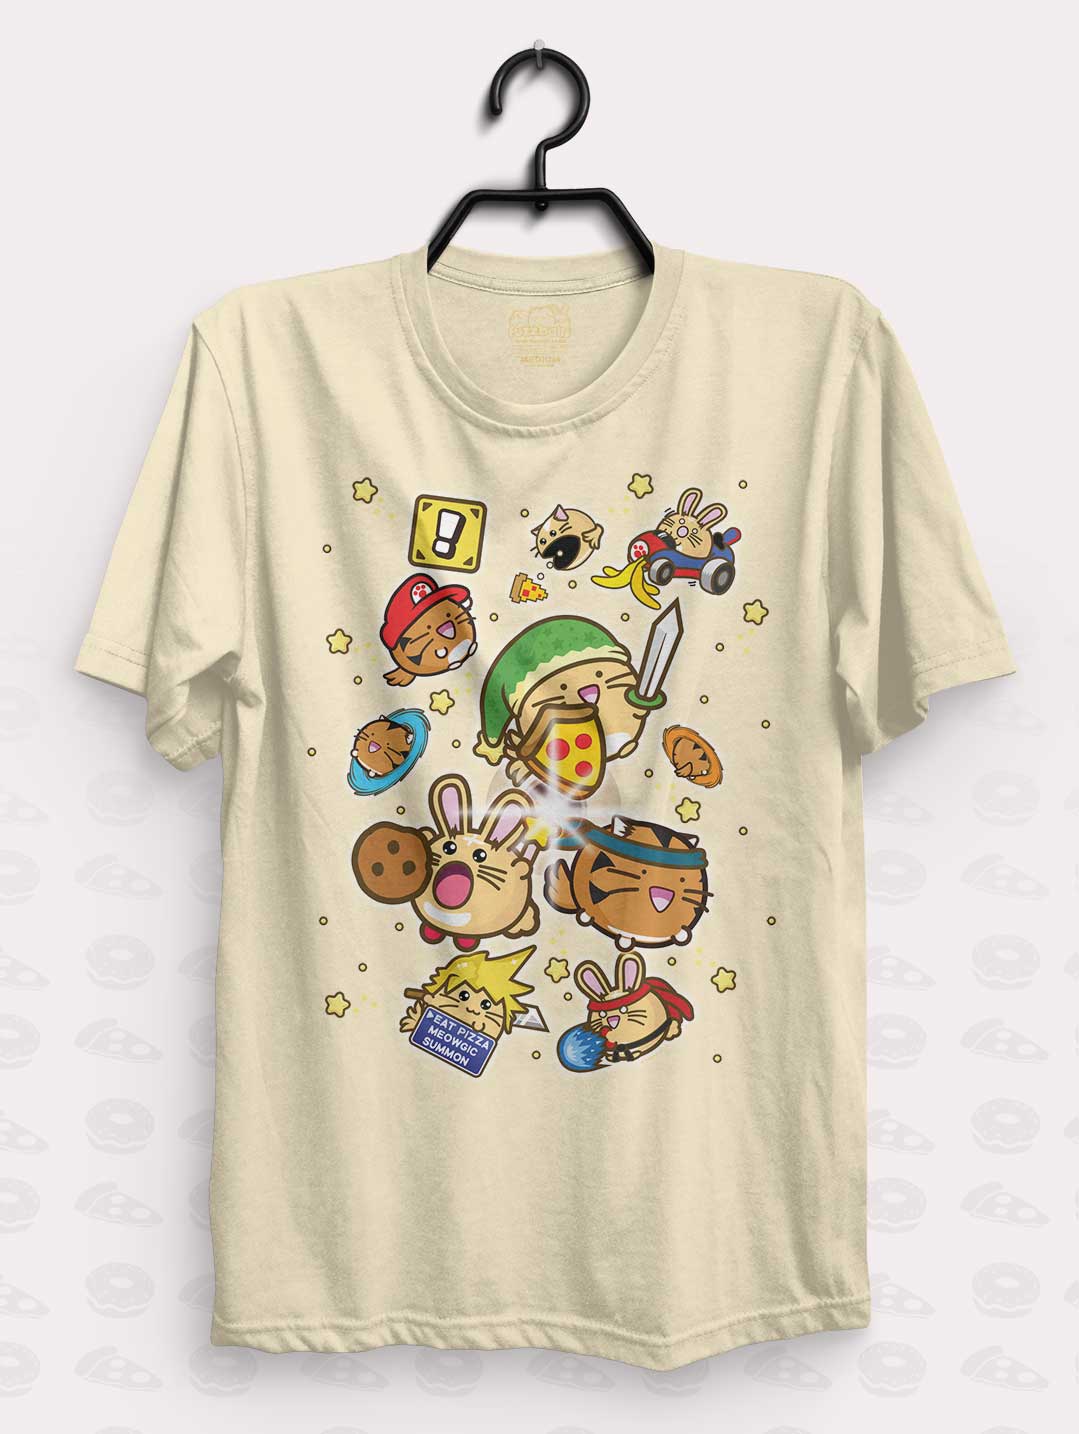 Fuzzballs Vs Video Games Shirt